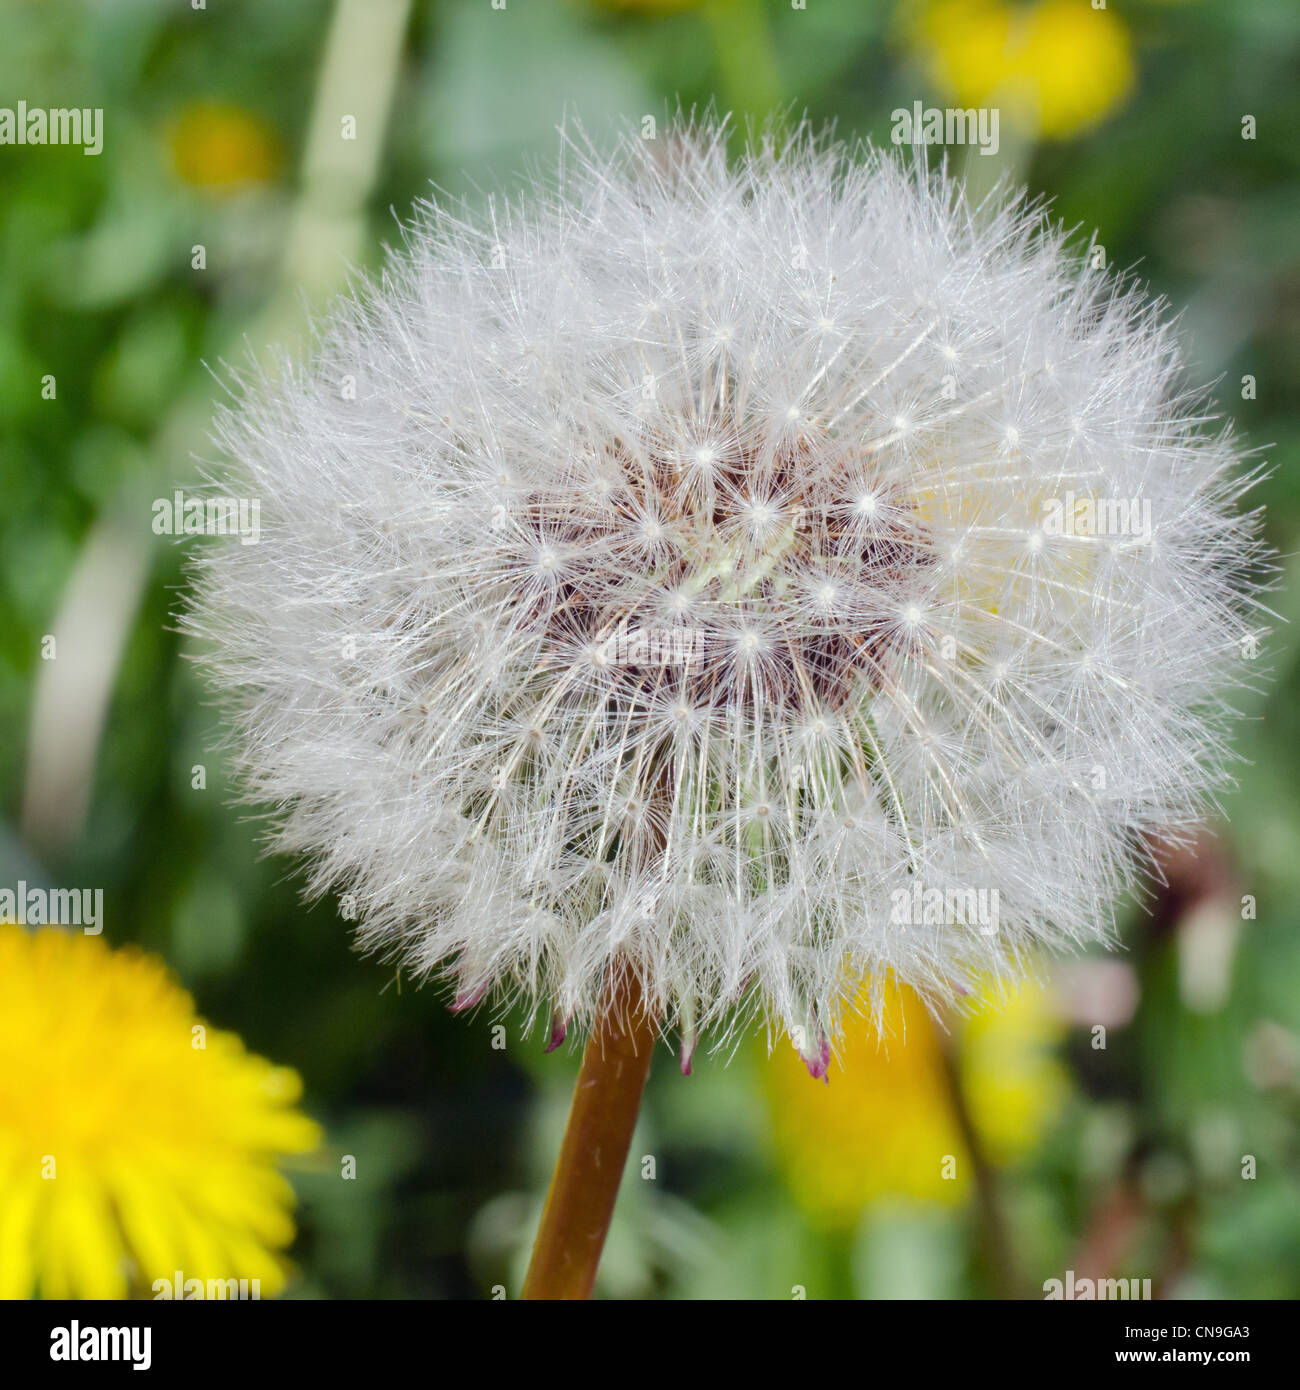 Closeup photograph of dandelion head, square format Stock Photo